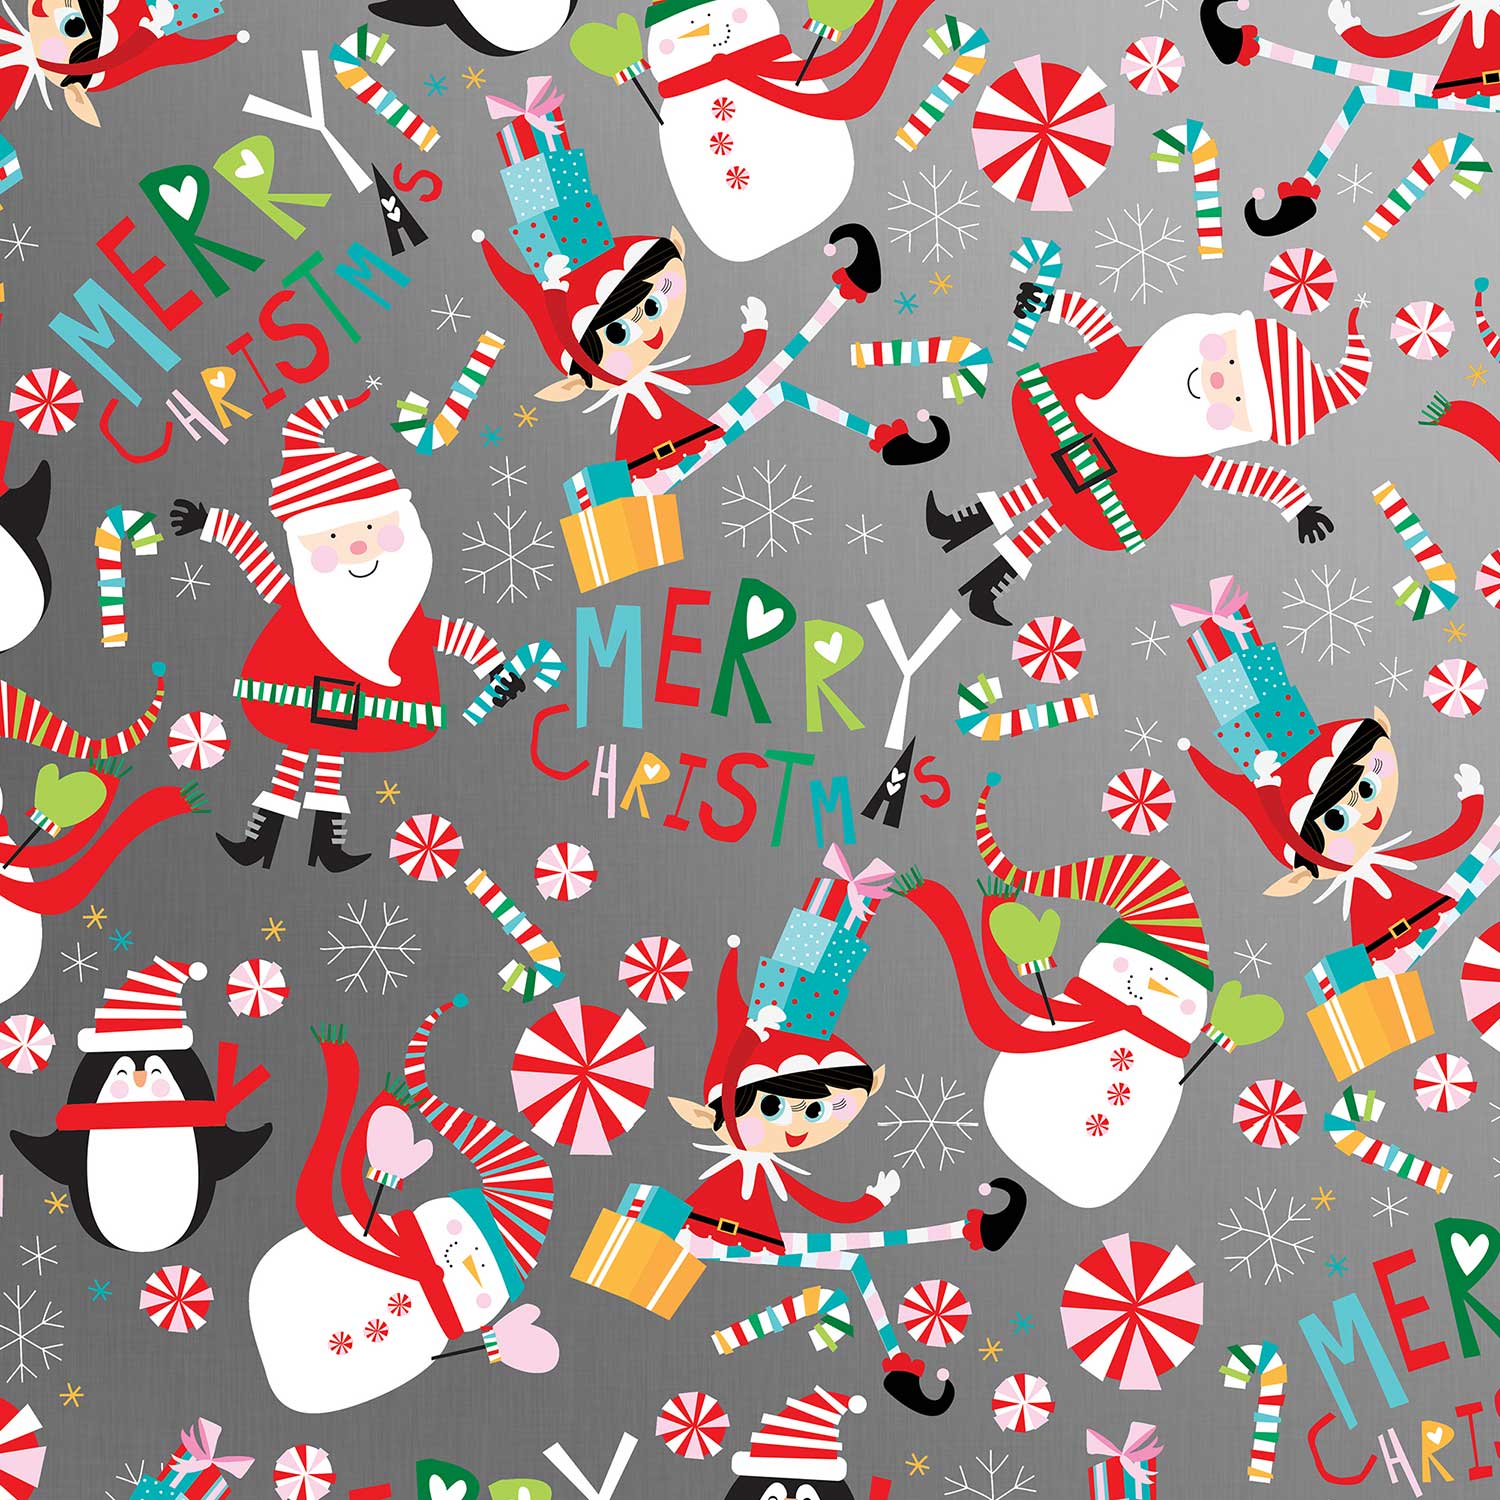 Santa & Snowmen Christmas Gift Wrap 1/4 Ream 208 ft x 24 in